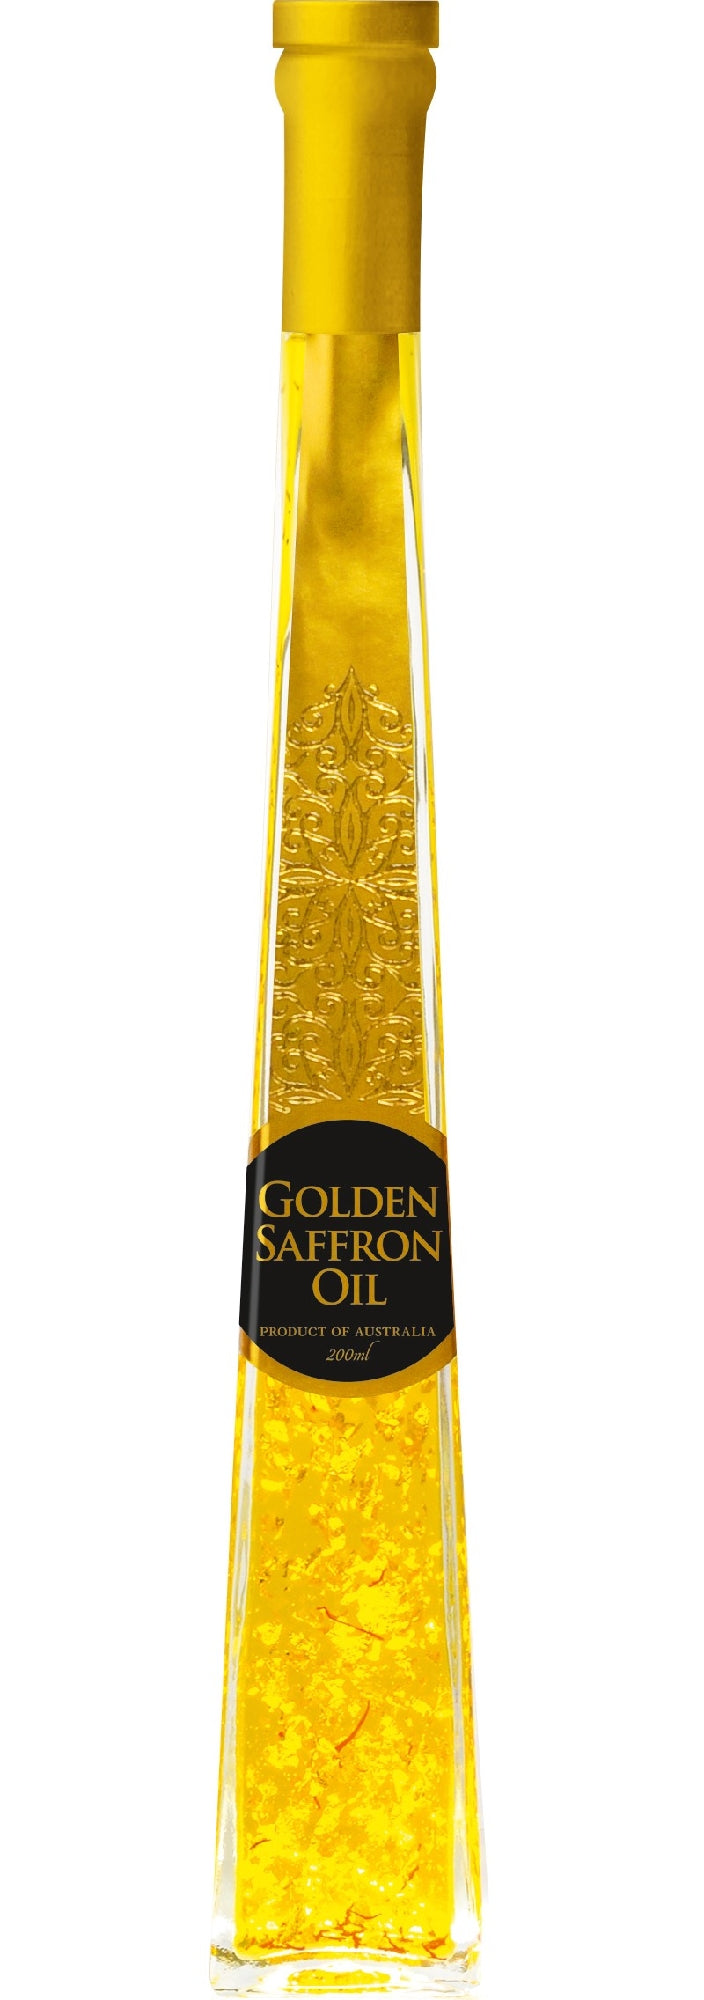 Ogilvie & Co Golden Saffron Oil 200ml